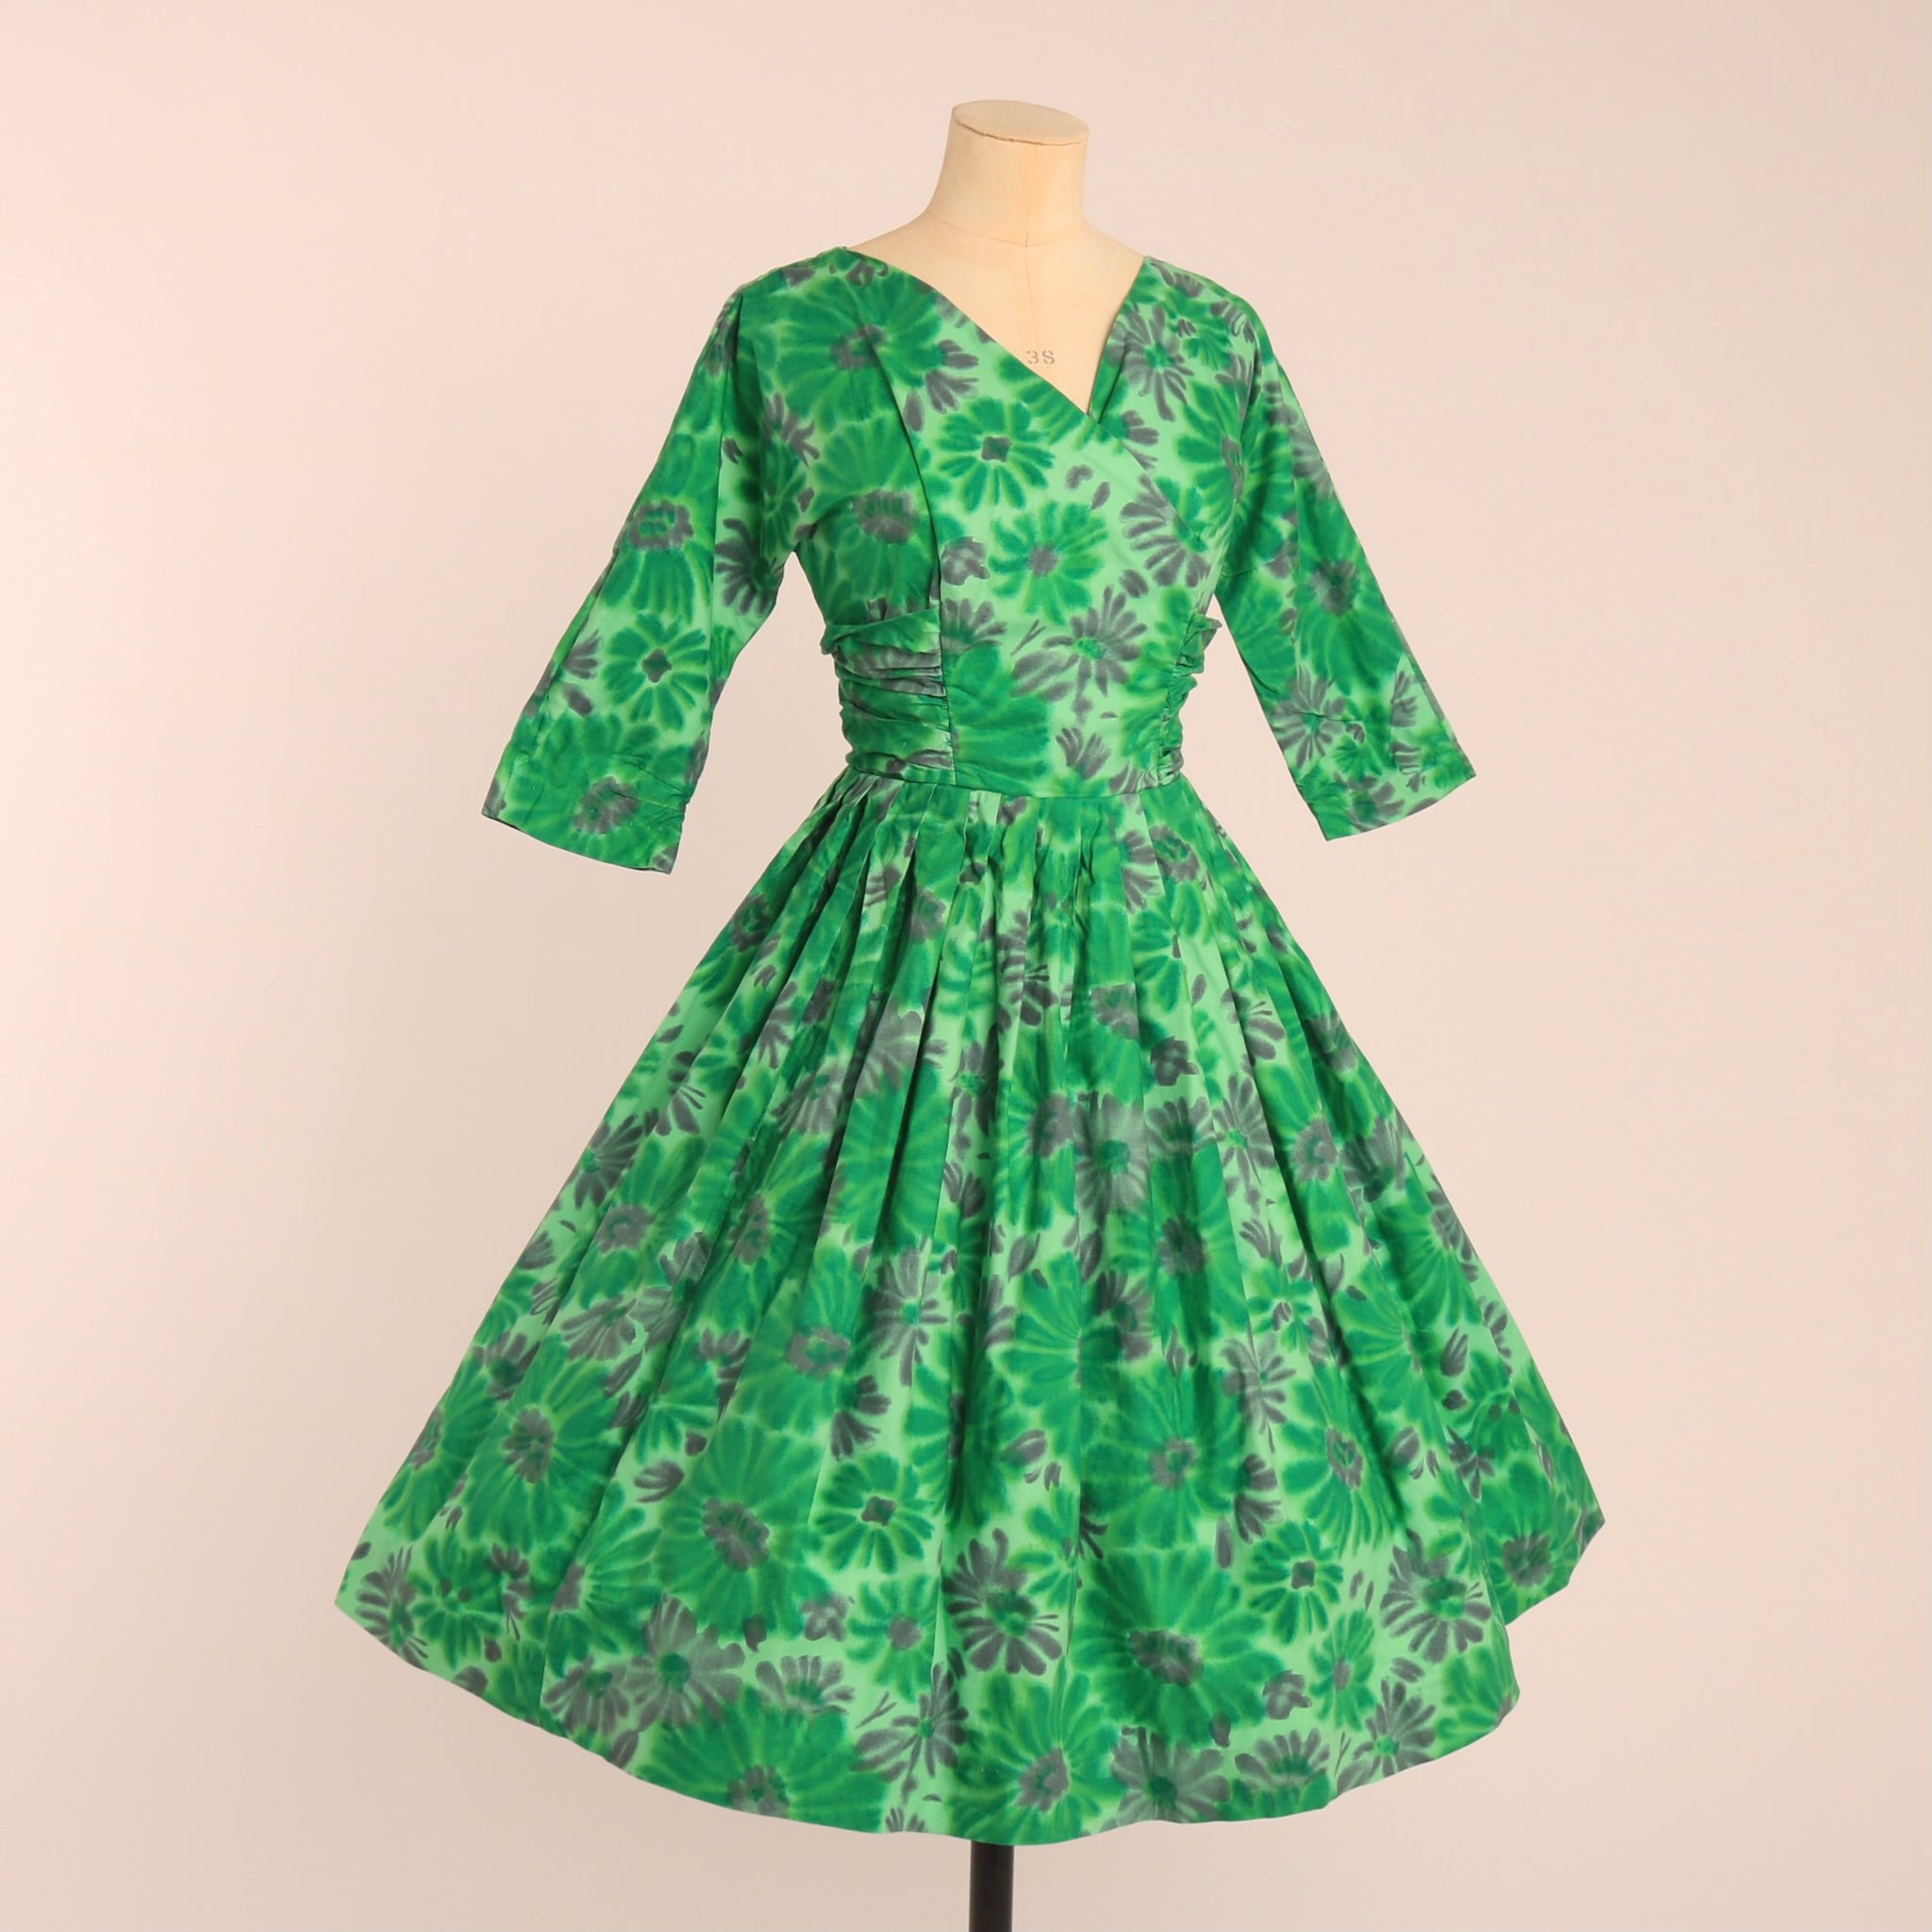 Vintage 1950s Original Dress Made From